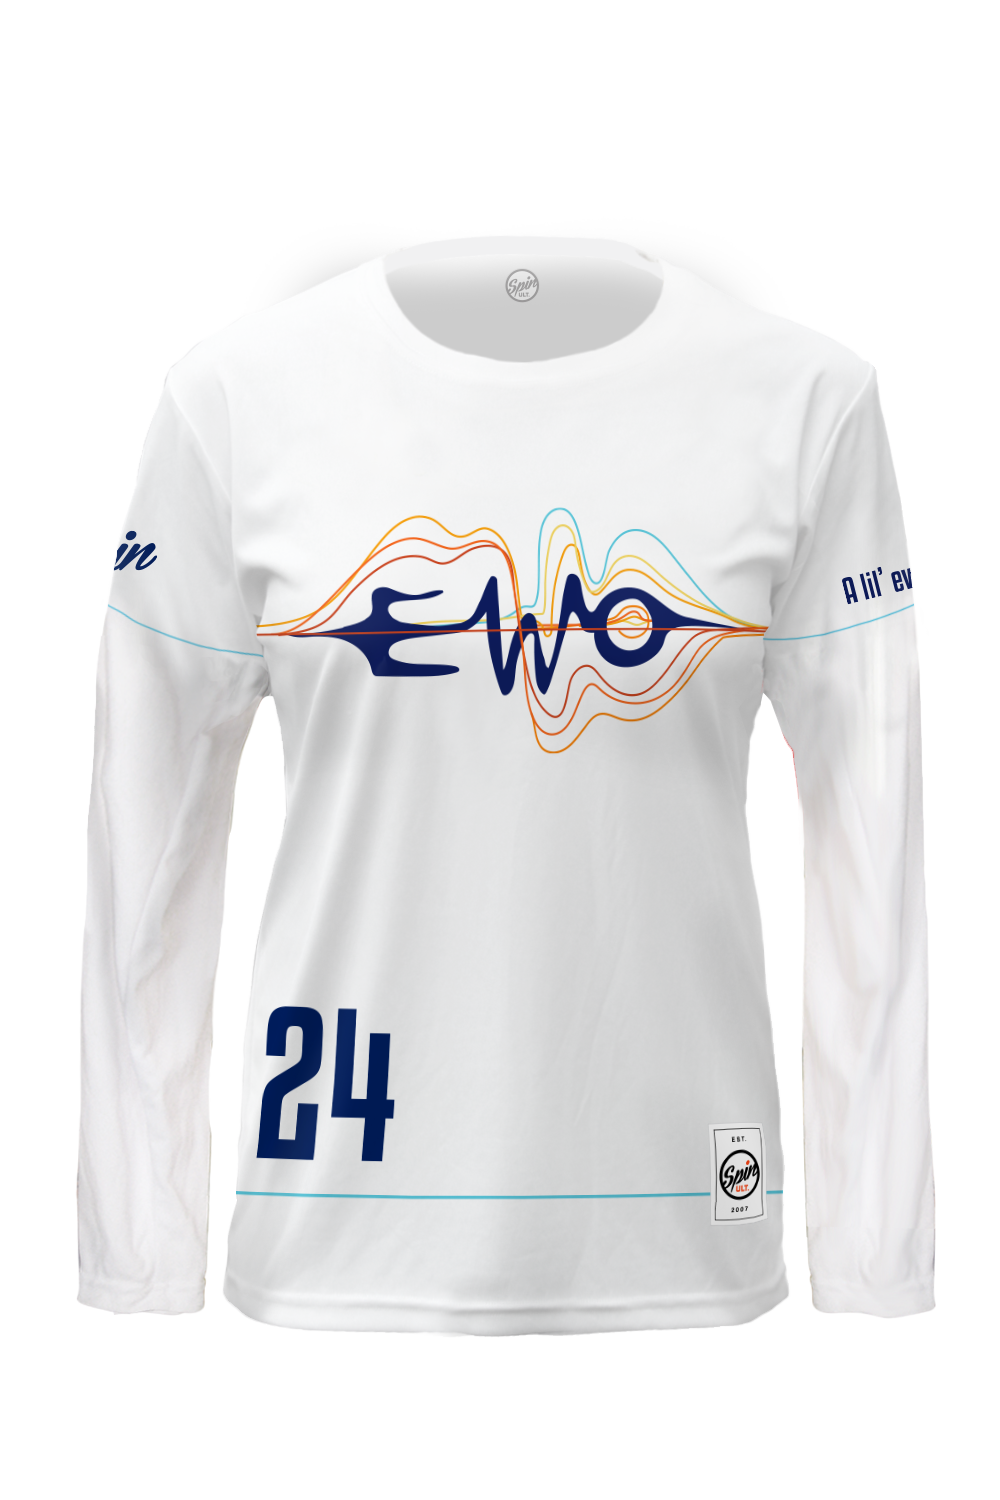 EWO Long Sleeve Jersey (White)